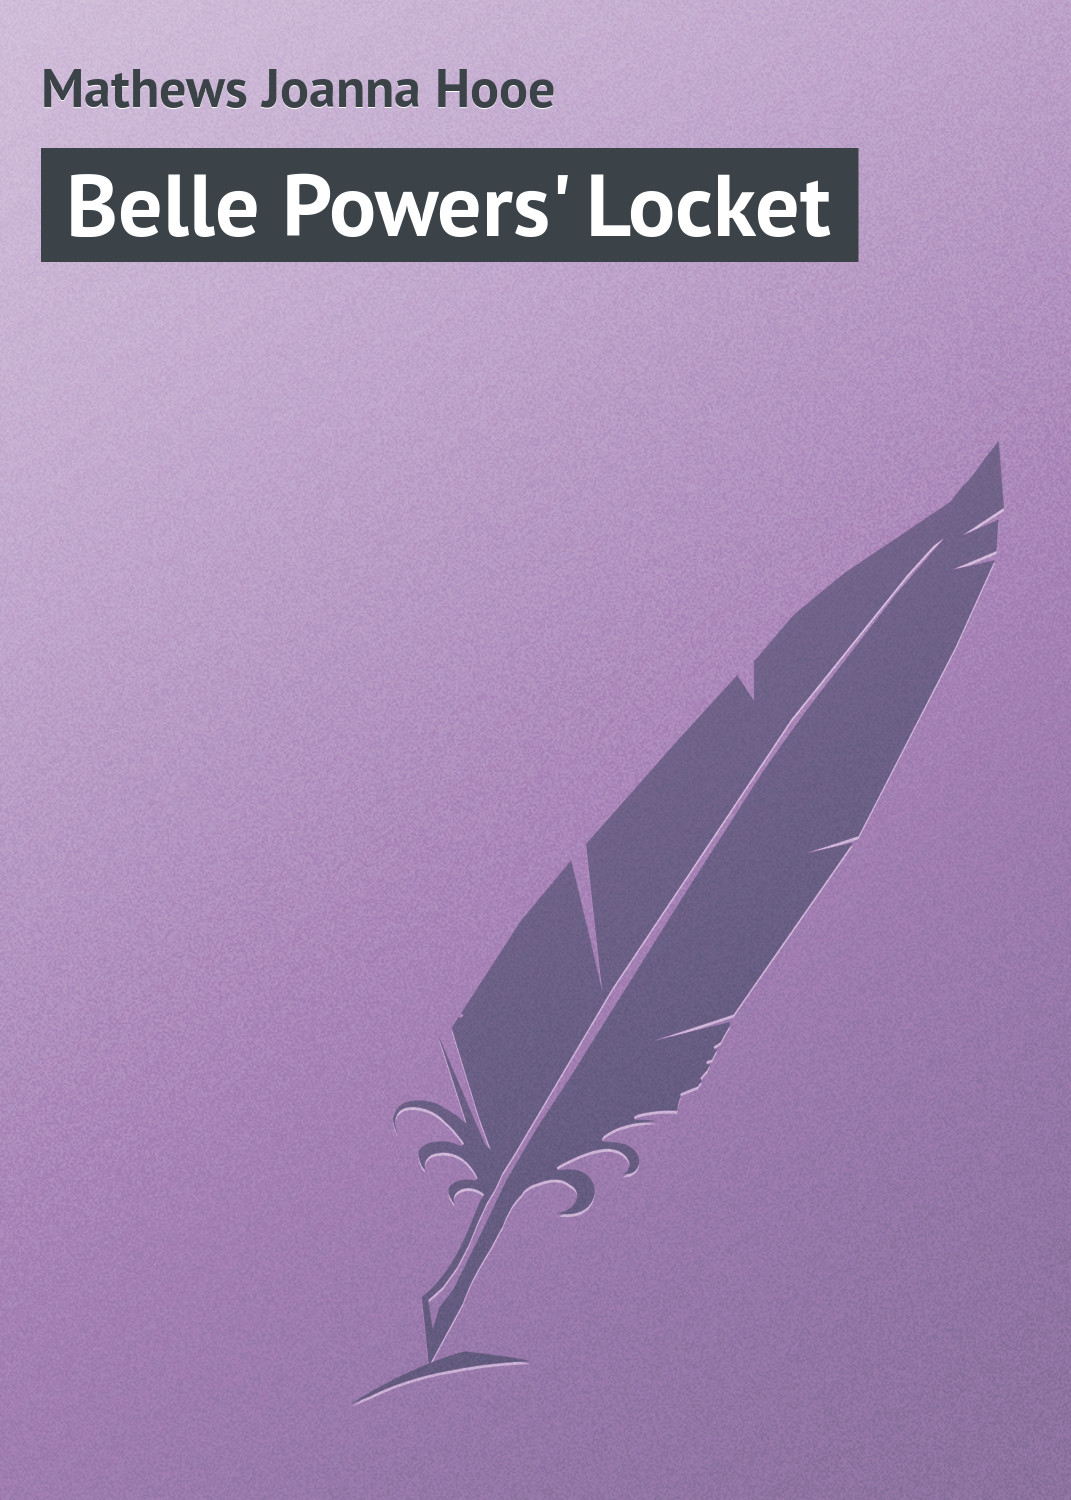 Belle Powers'Locket